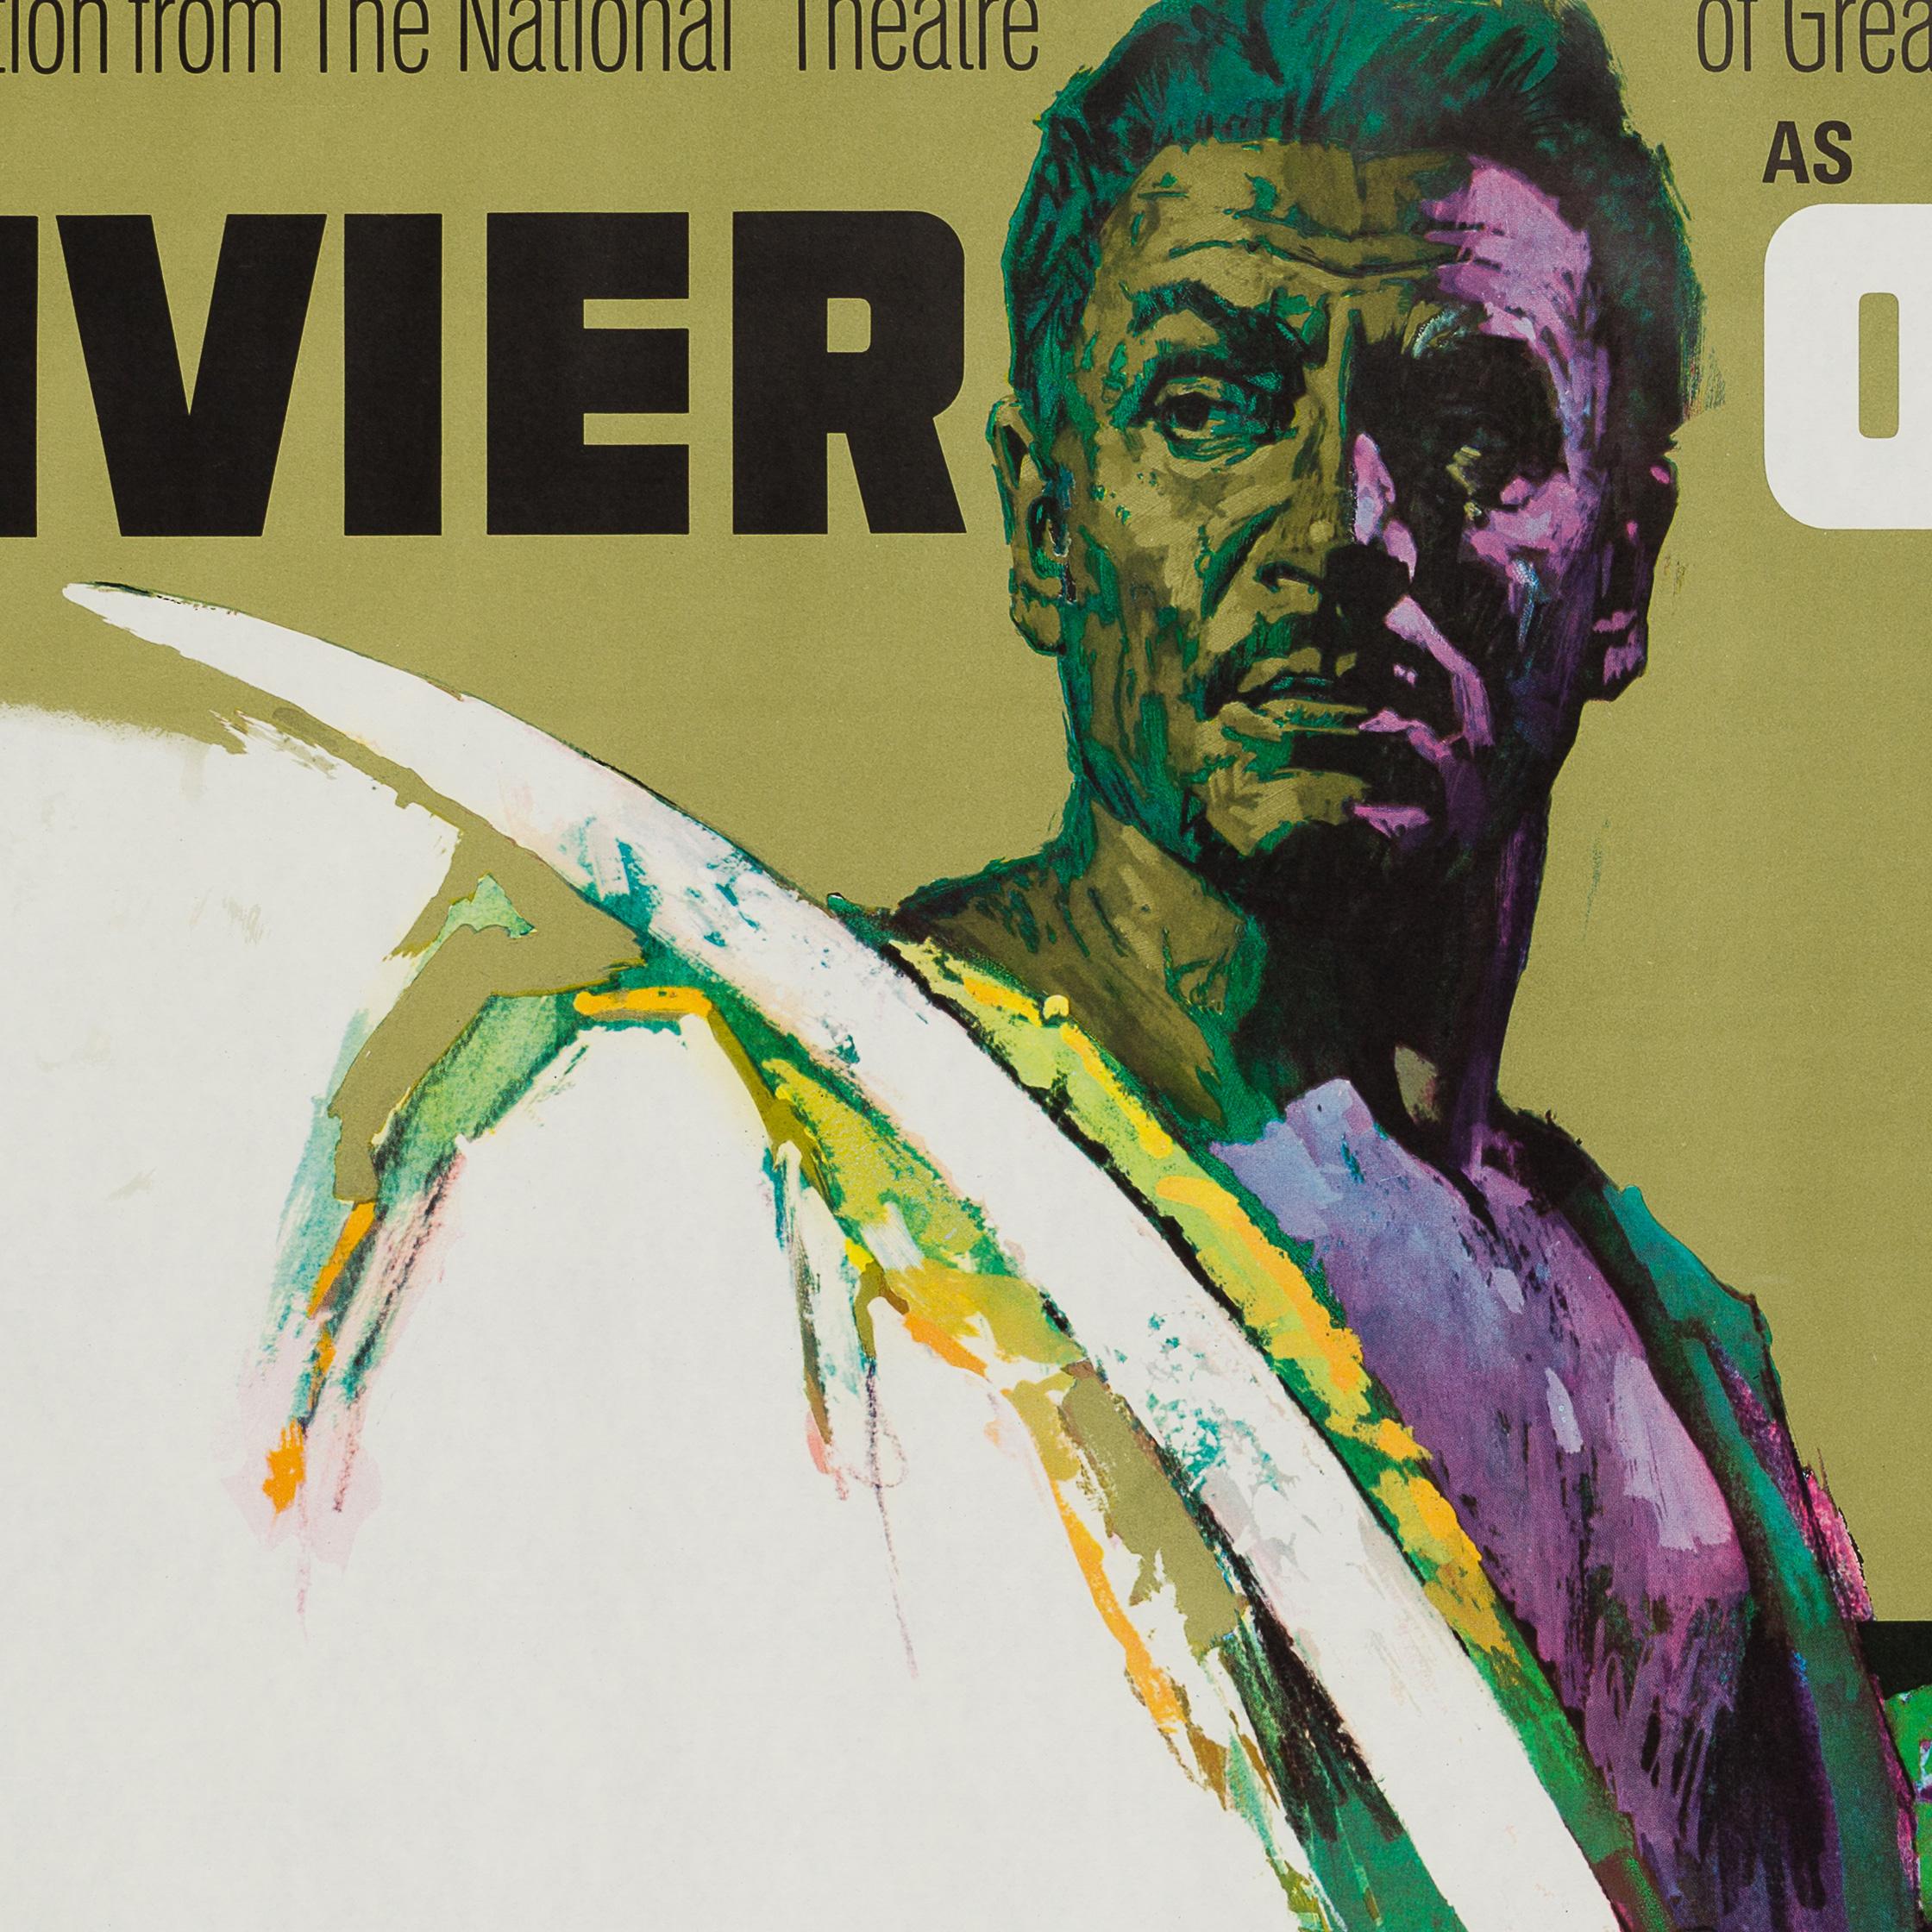 British Othello UK Film Poster, 1965